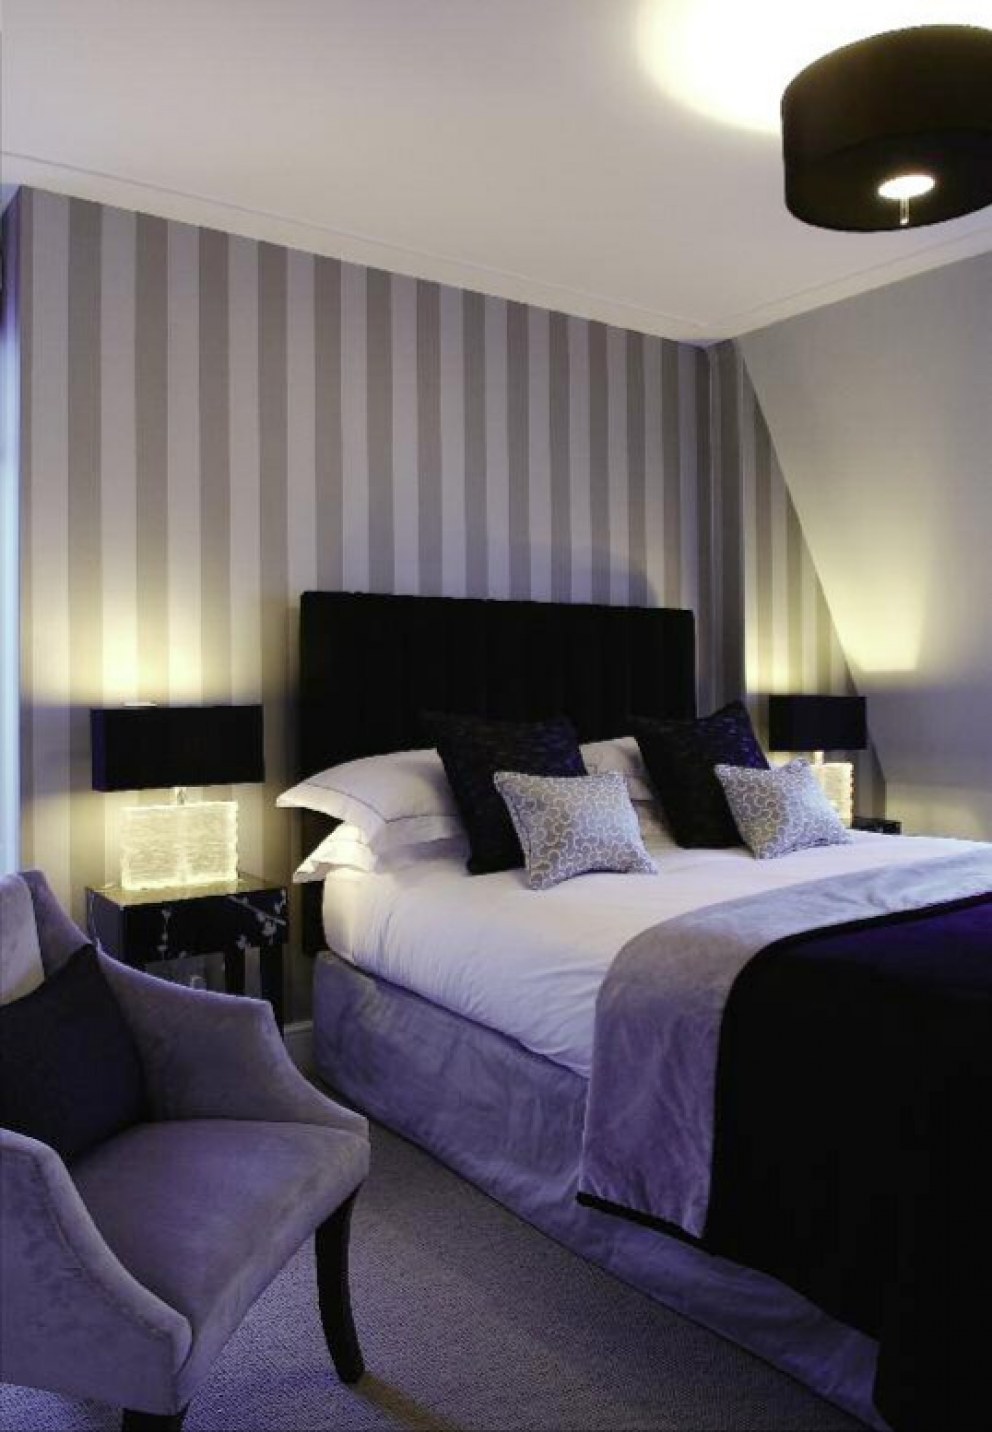 Penthouse Apartment, St John's Wood | Guest Bedroom | Interior Designers